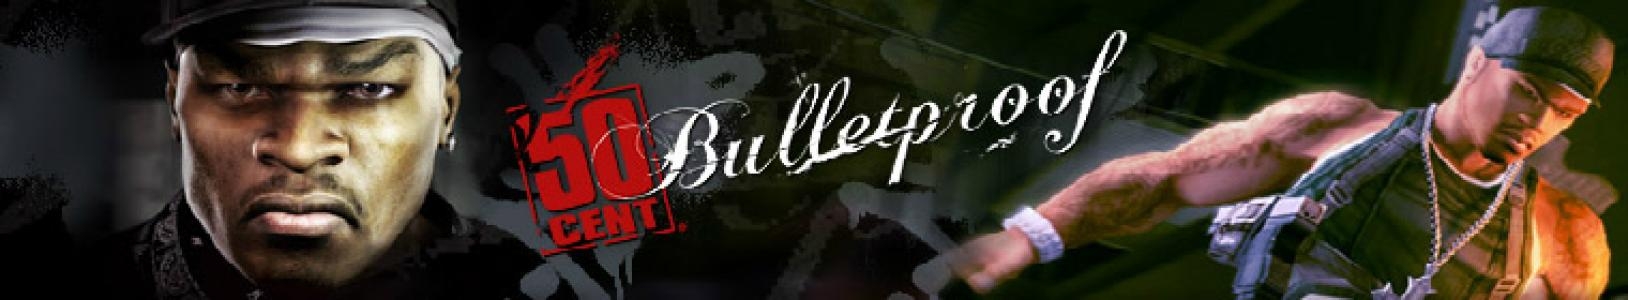 50 Cent: Bulletproof banner